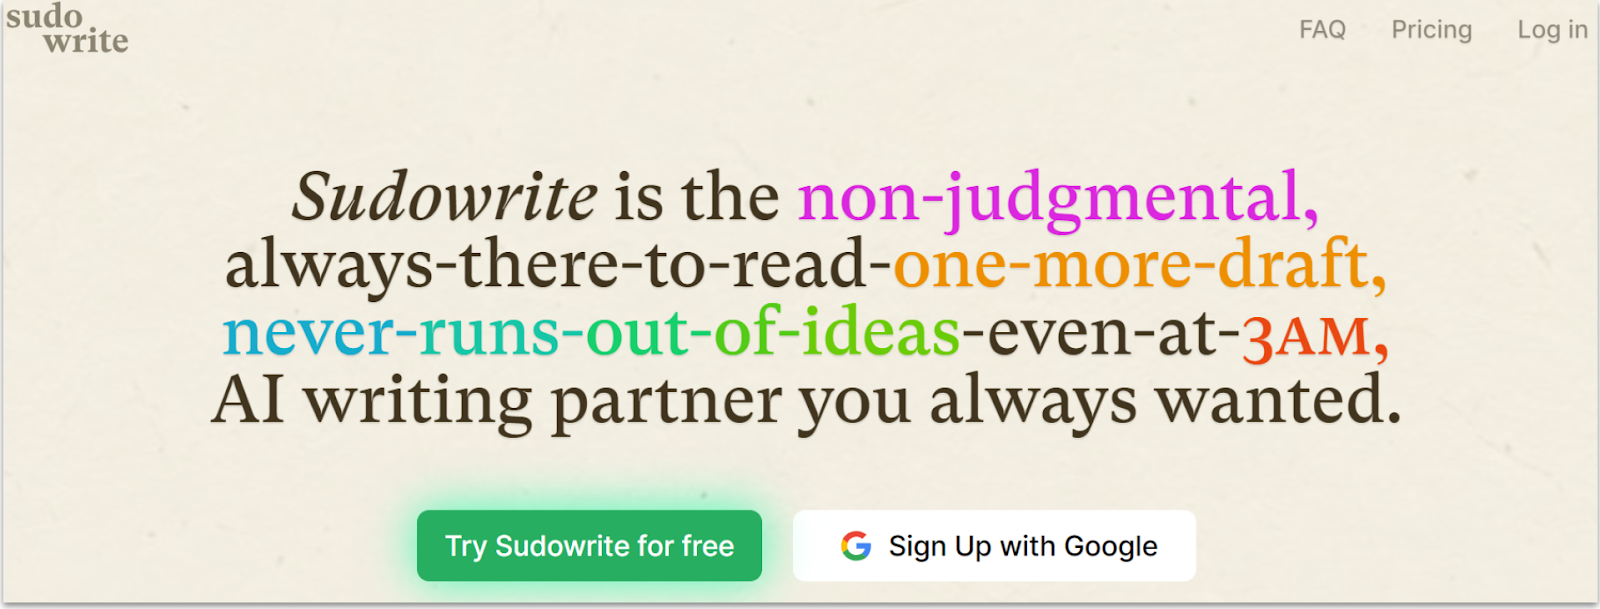 Sudowrite homepage